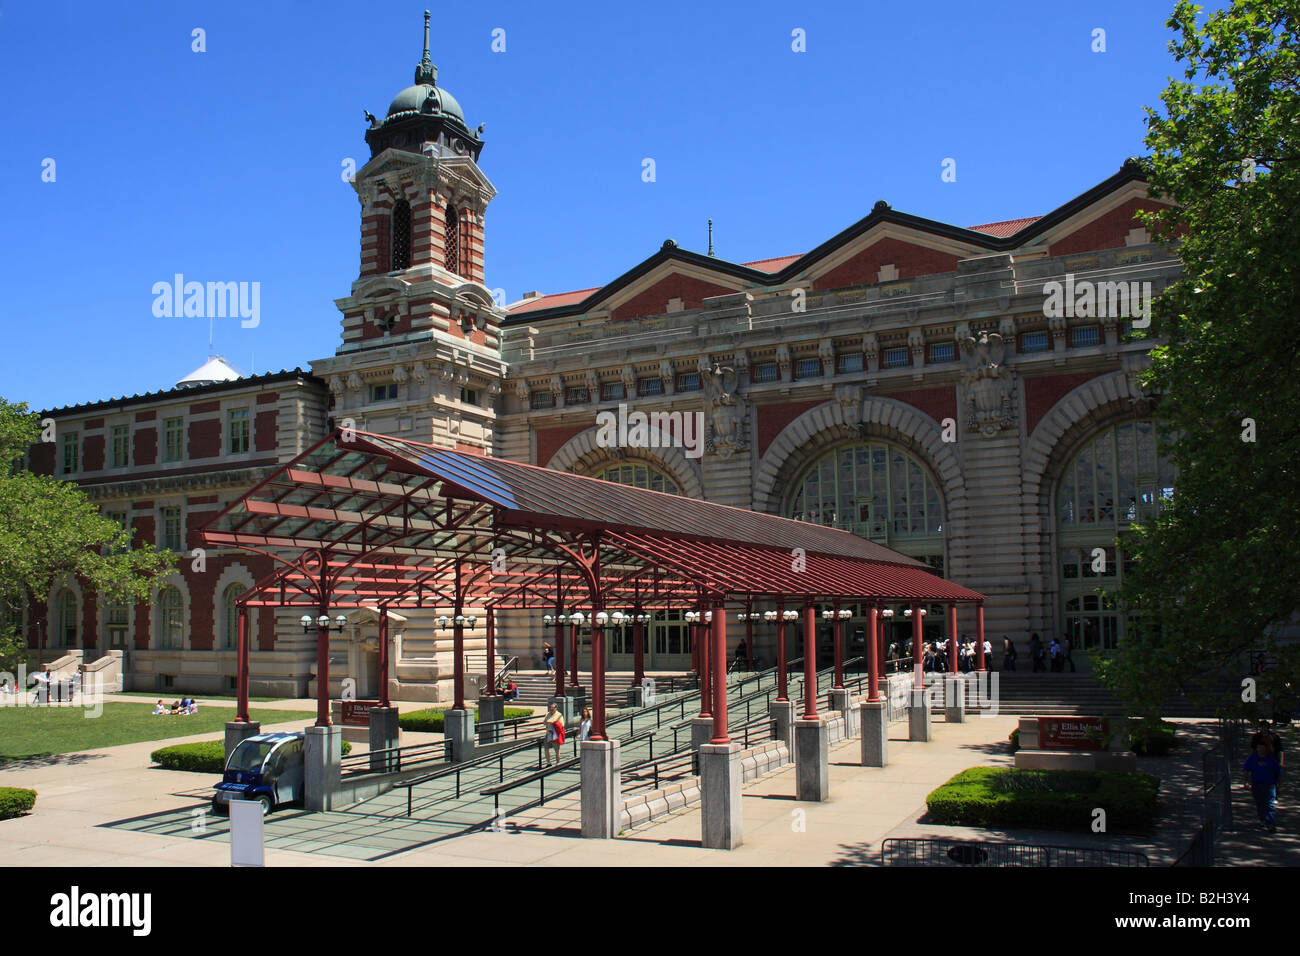 Ellis Island Immigration Museum - New York City, USA Stock Photo